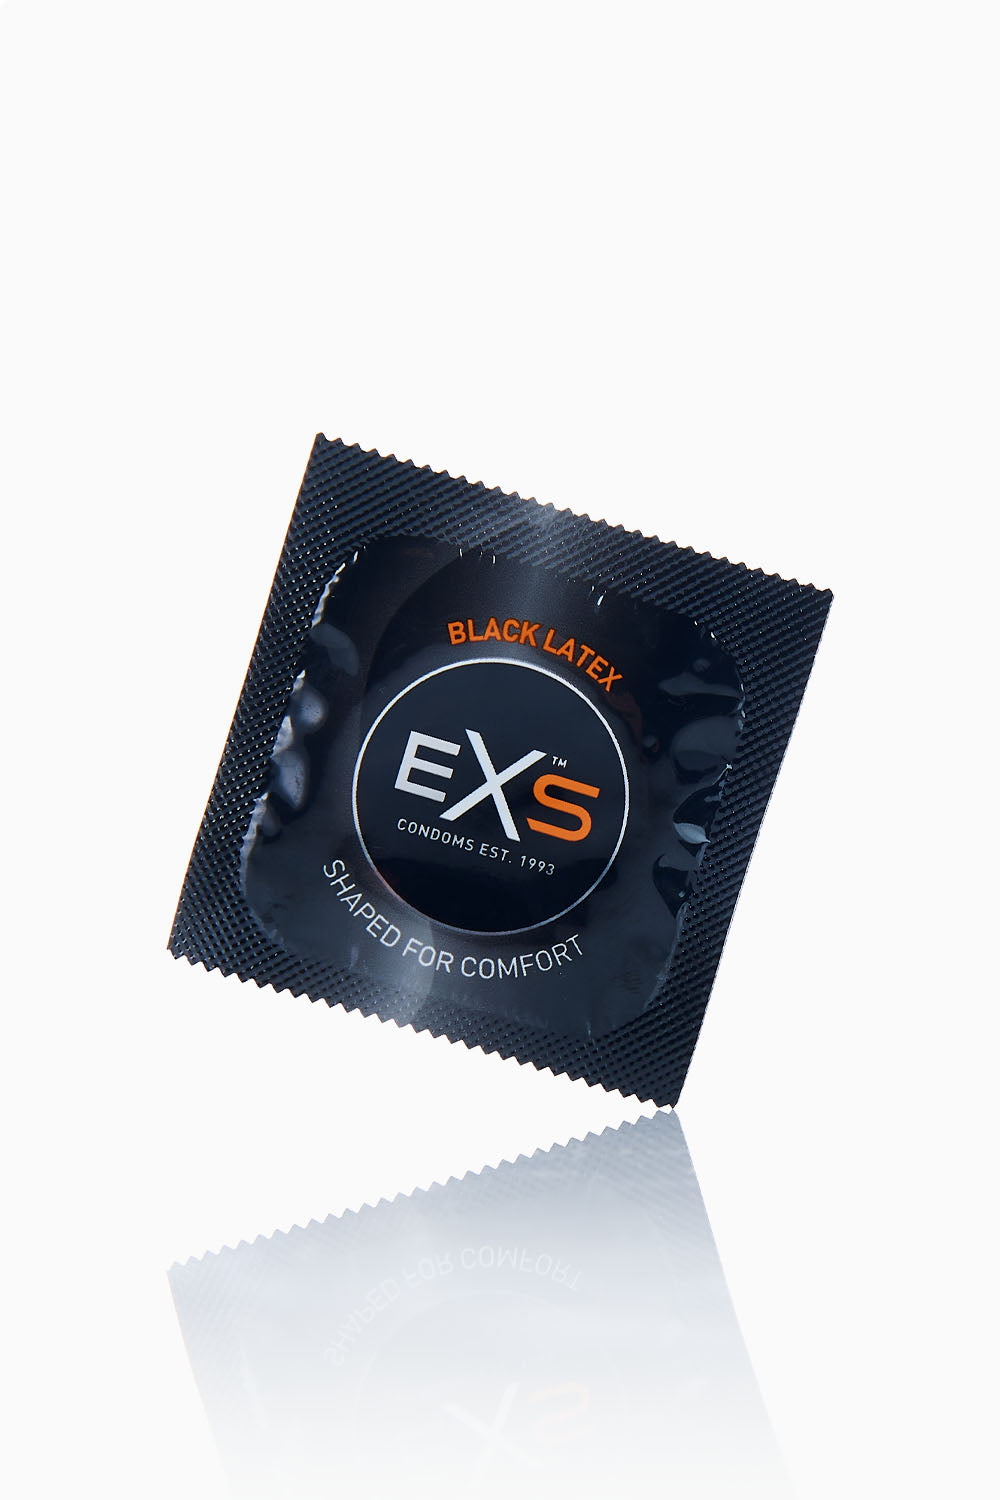 EXS Black Latex Condoms 12 Pack